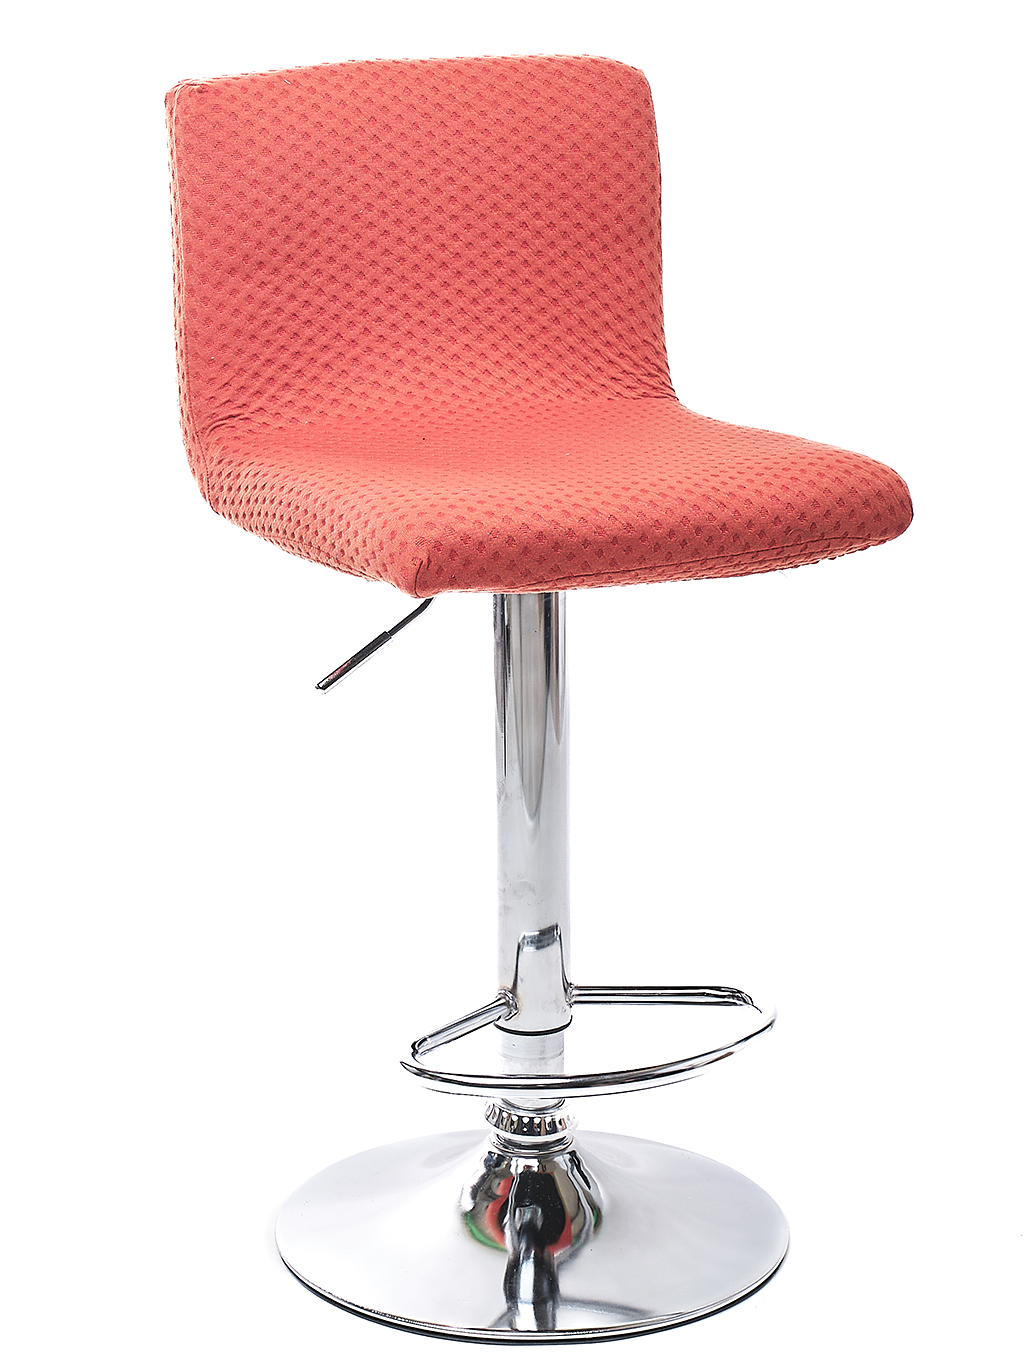 Komashop Potah na barovou židli NATALI Barva: Oranžová